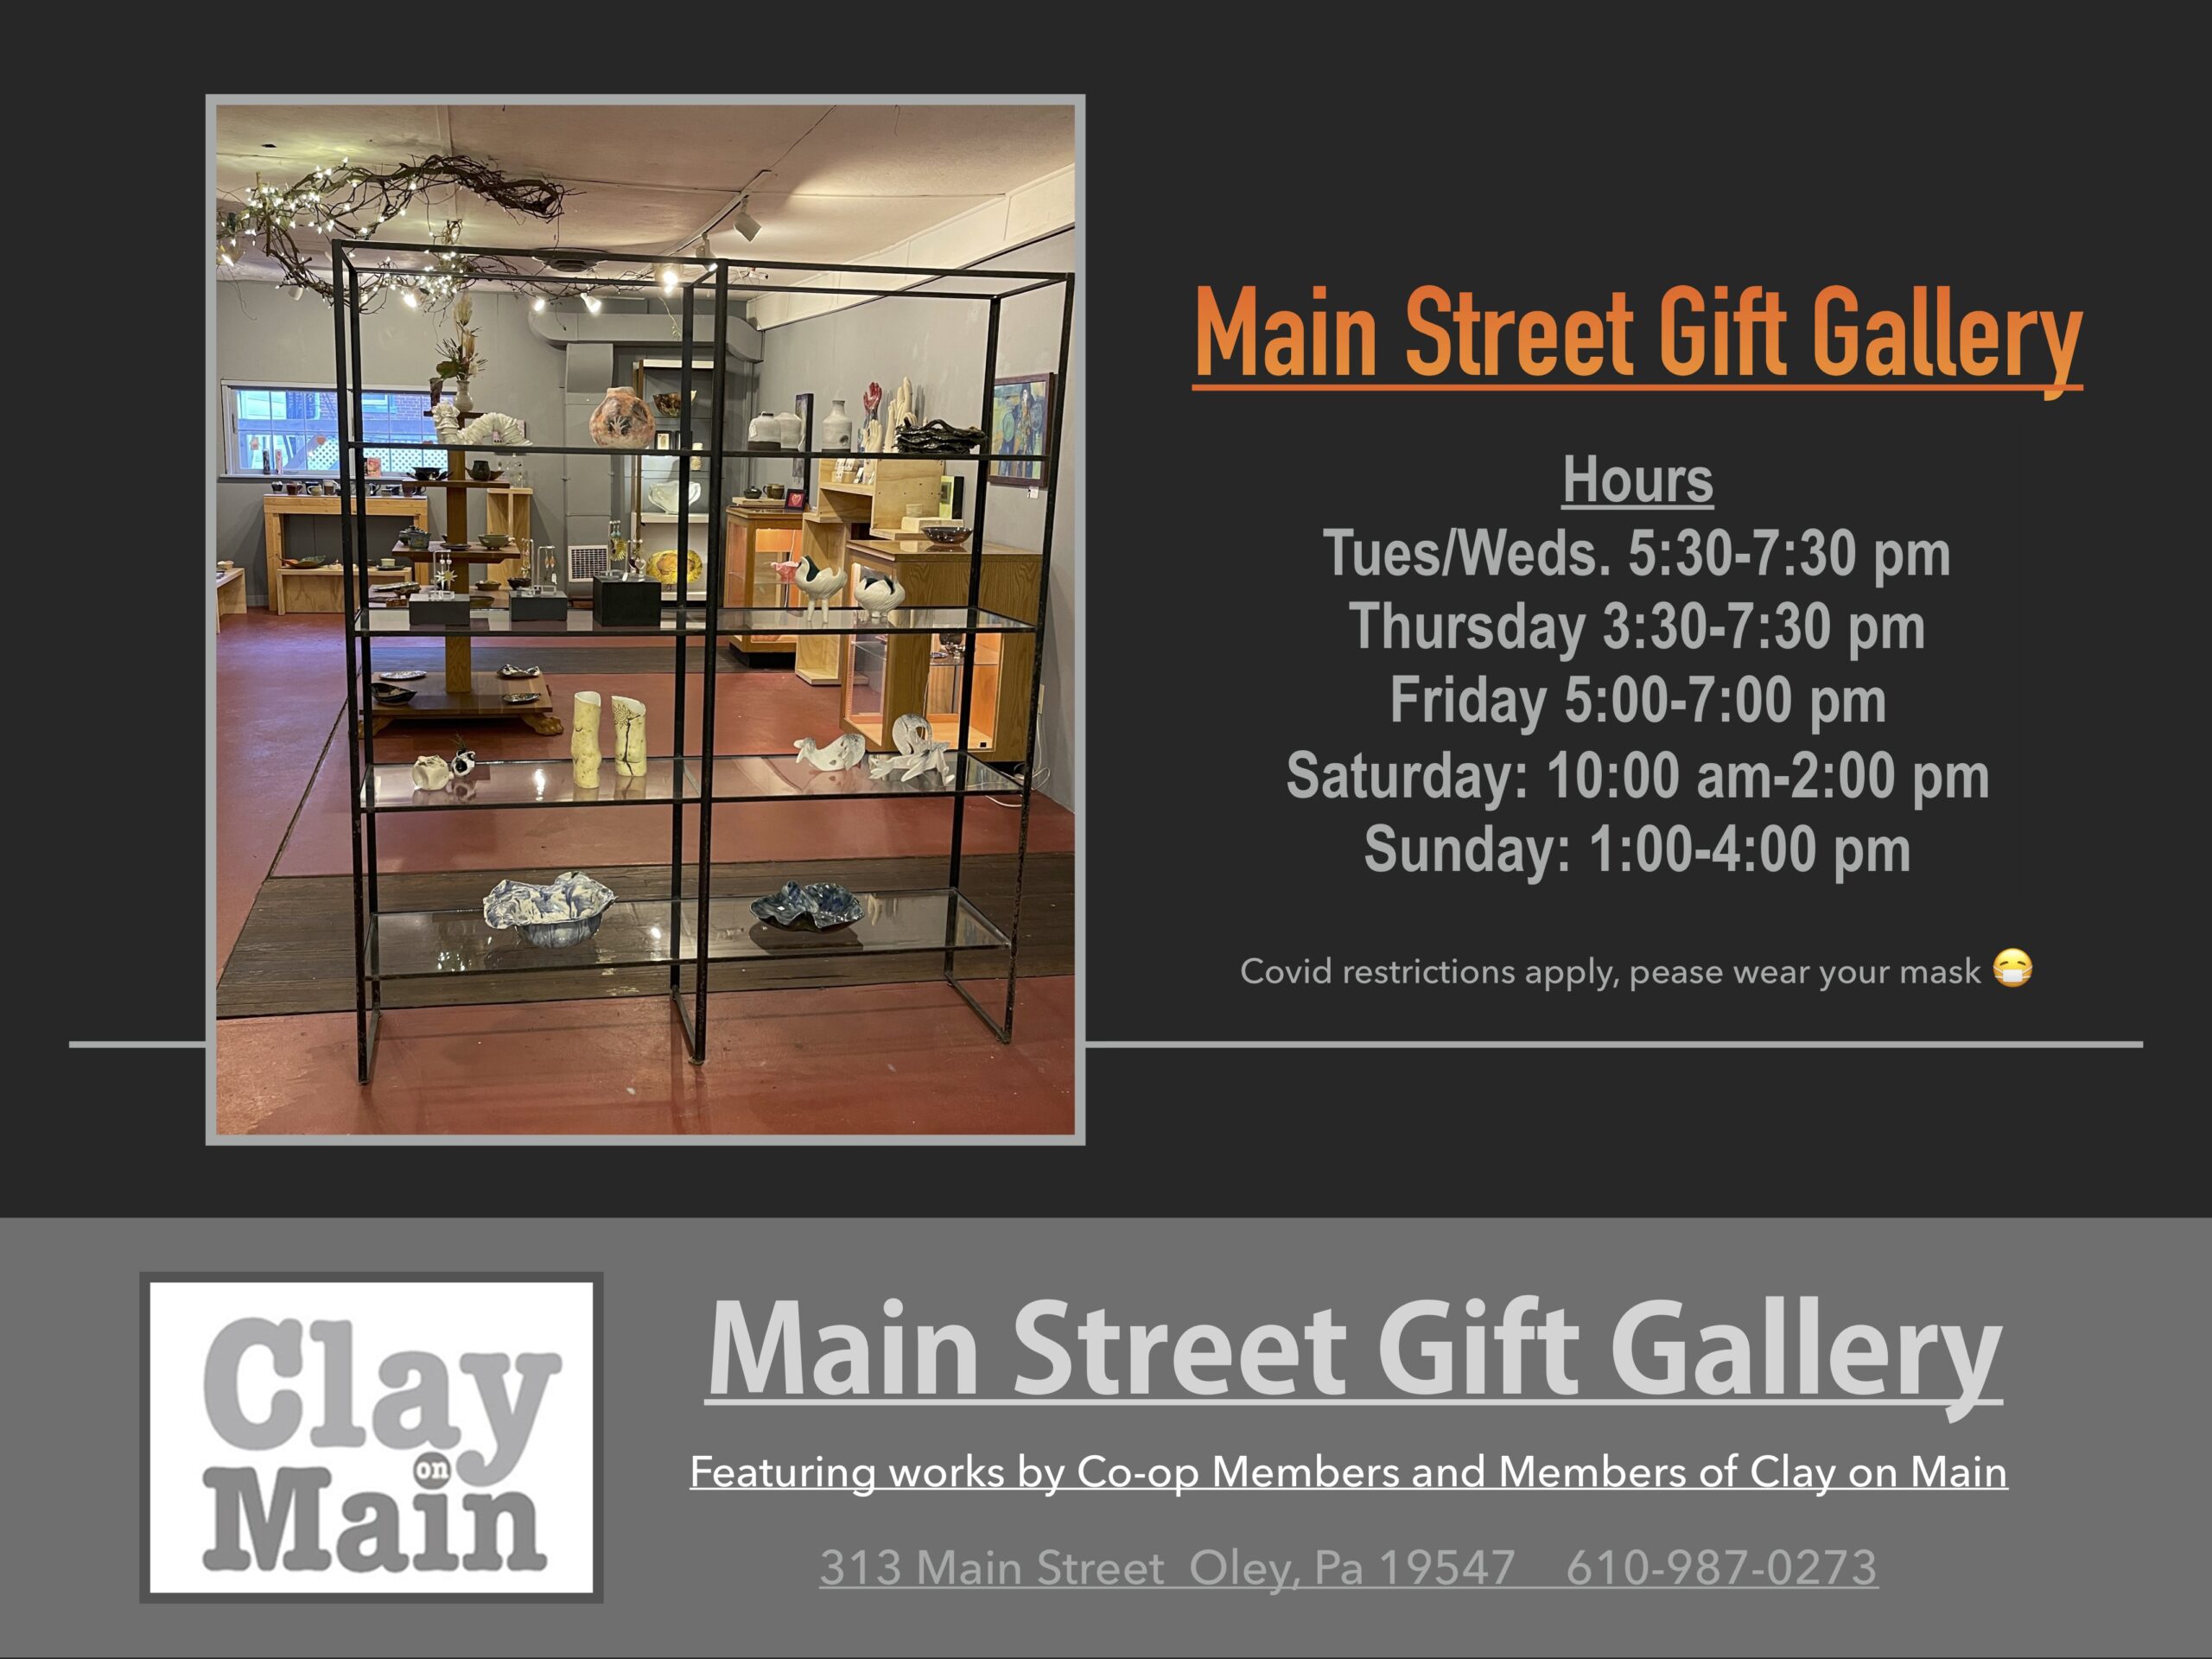 Main Street Gift Gallery is open